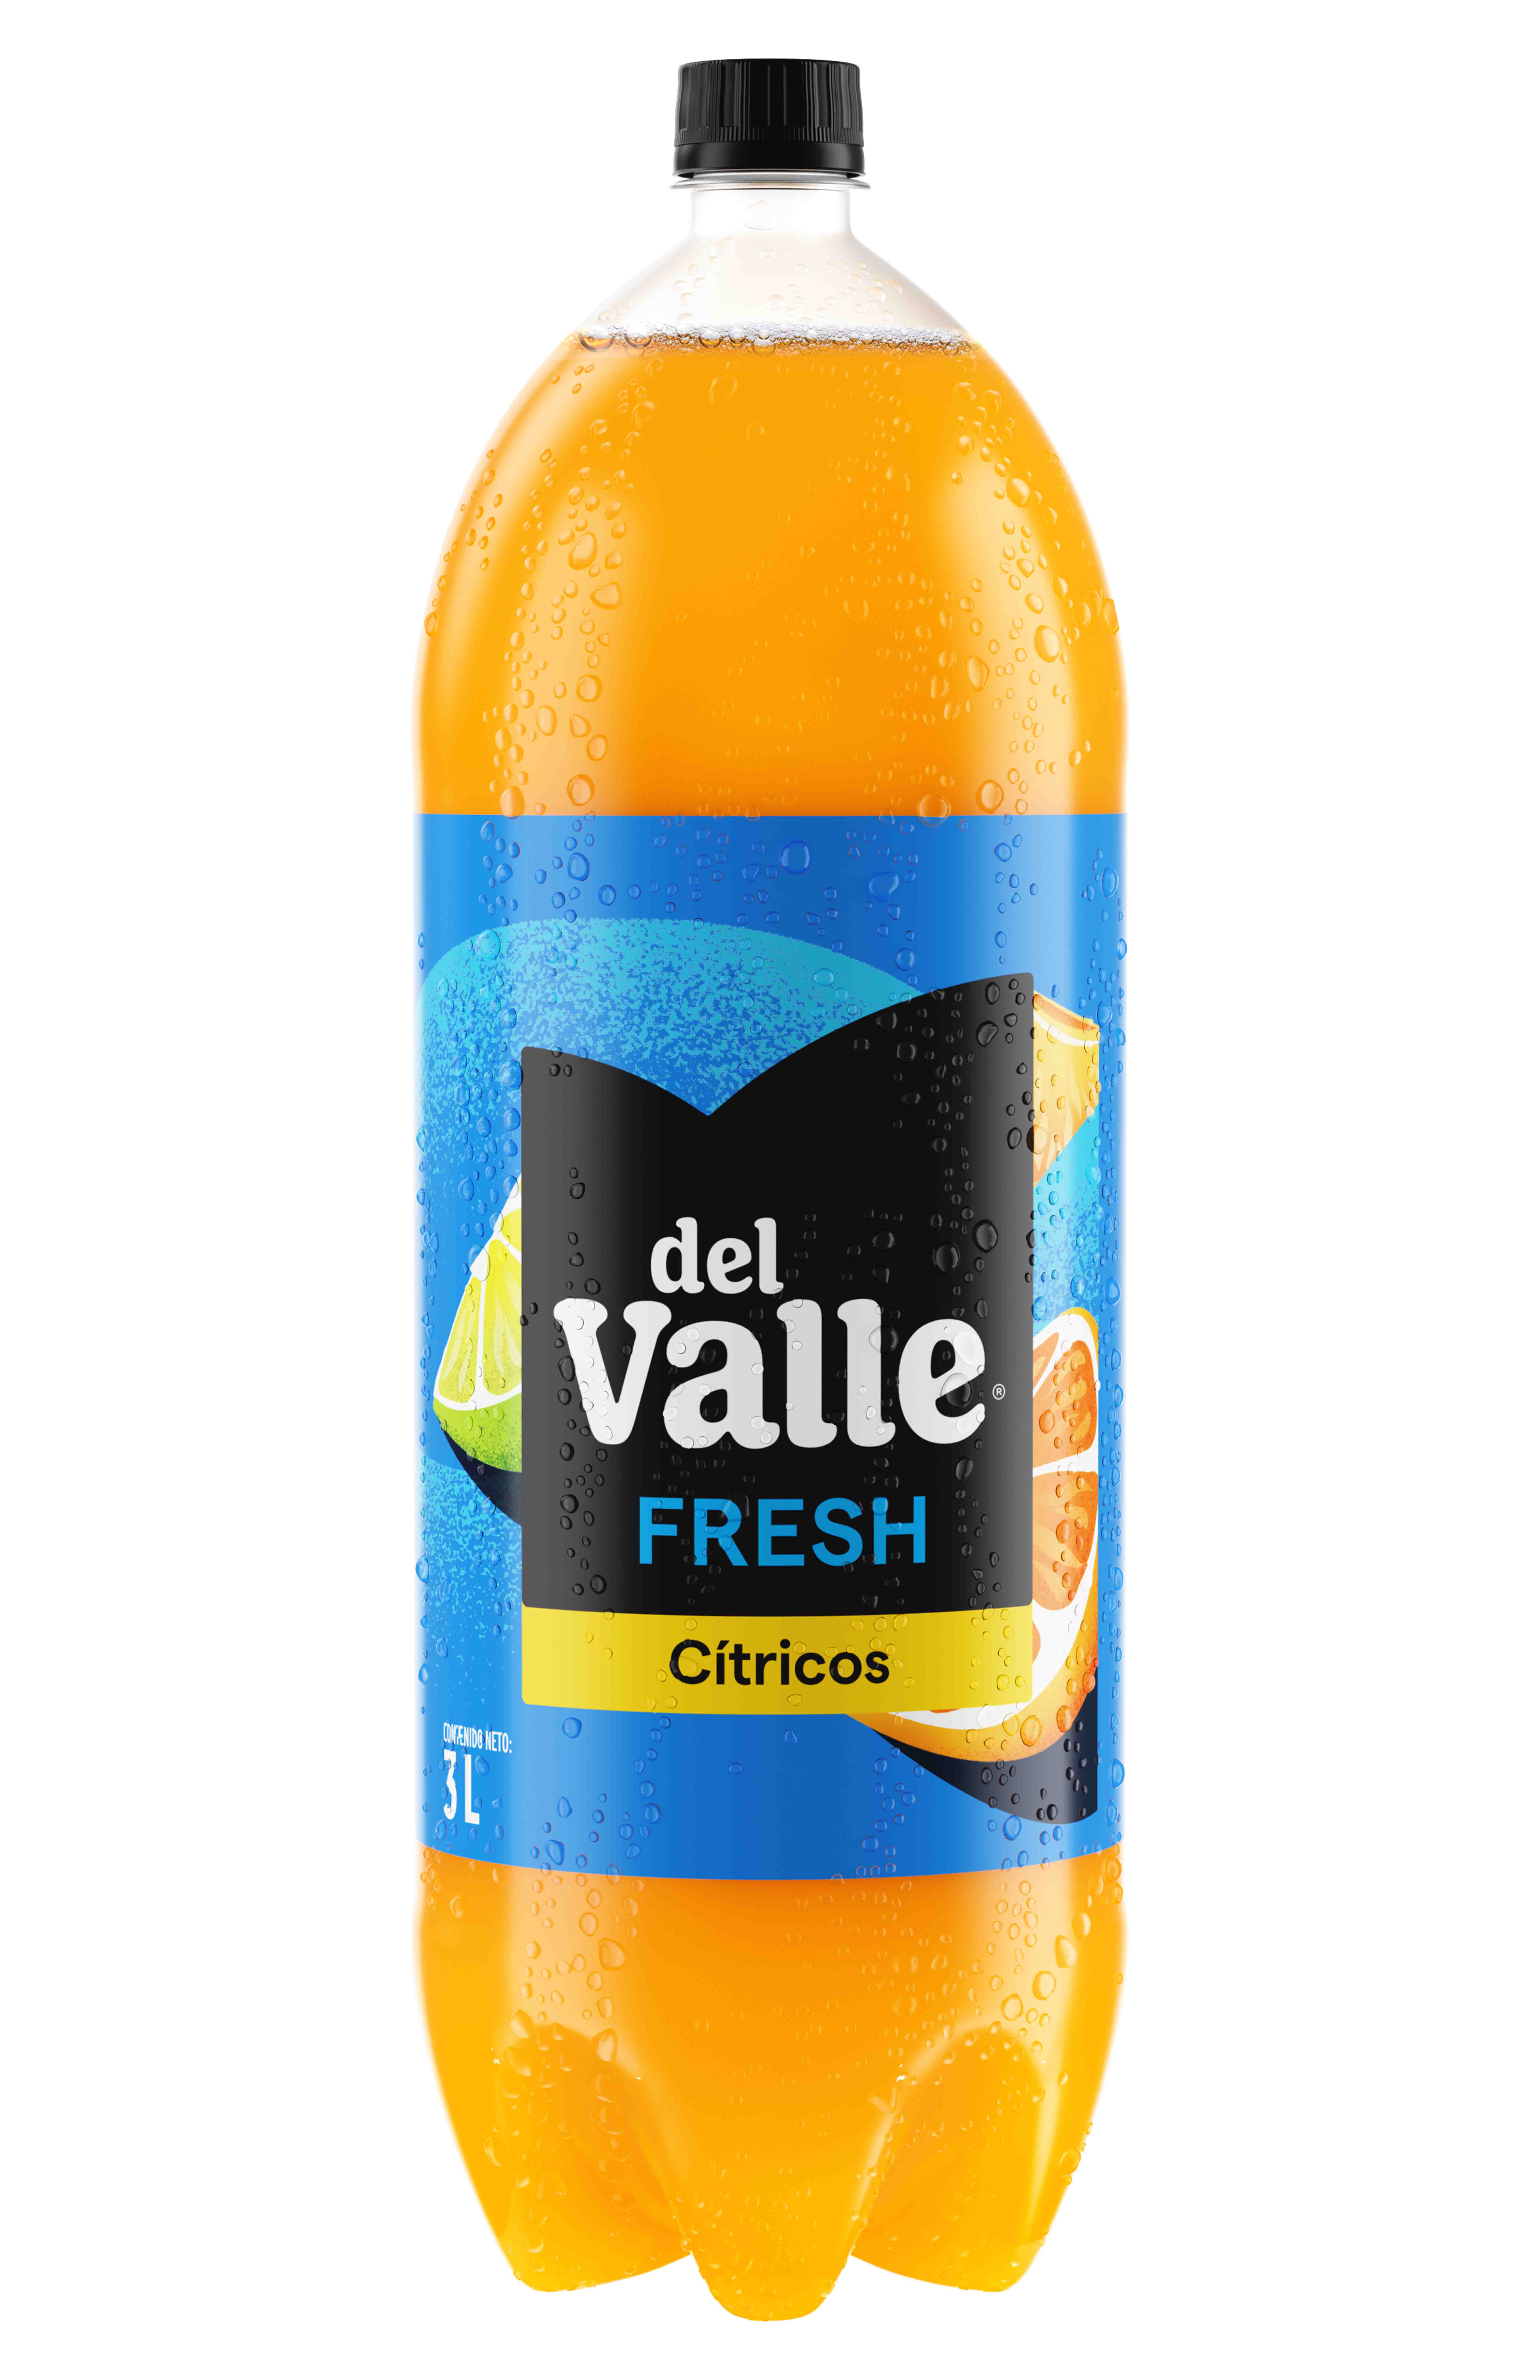 Del Valle Fresh Citricos